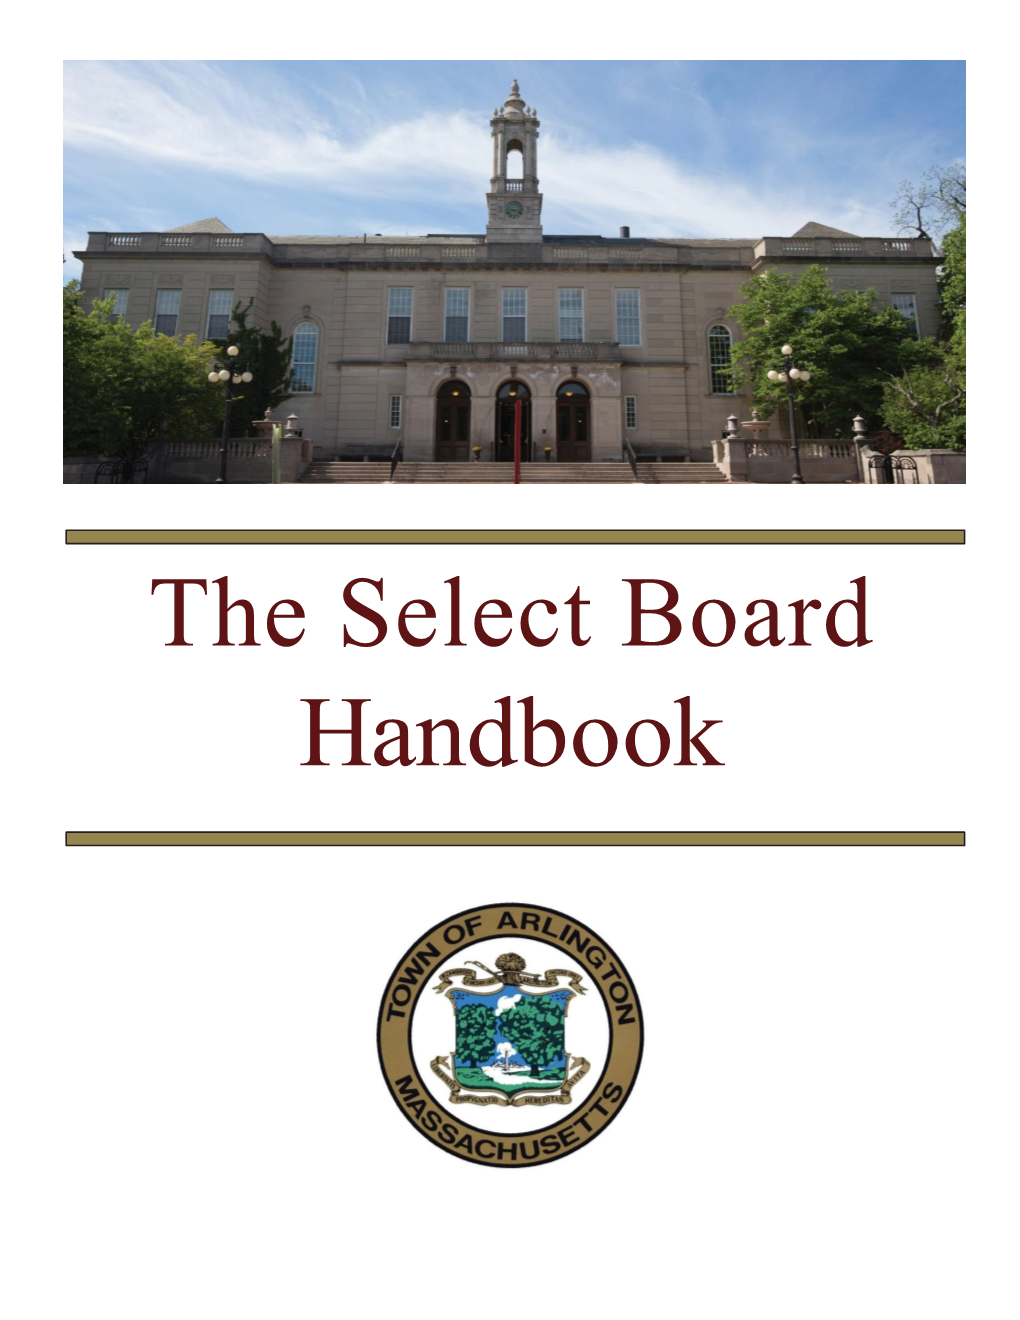 The Select Board Handbook